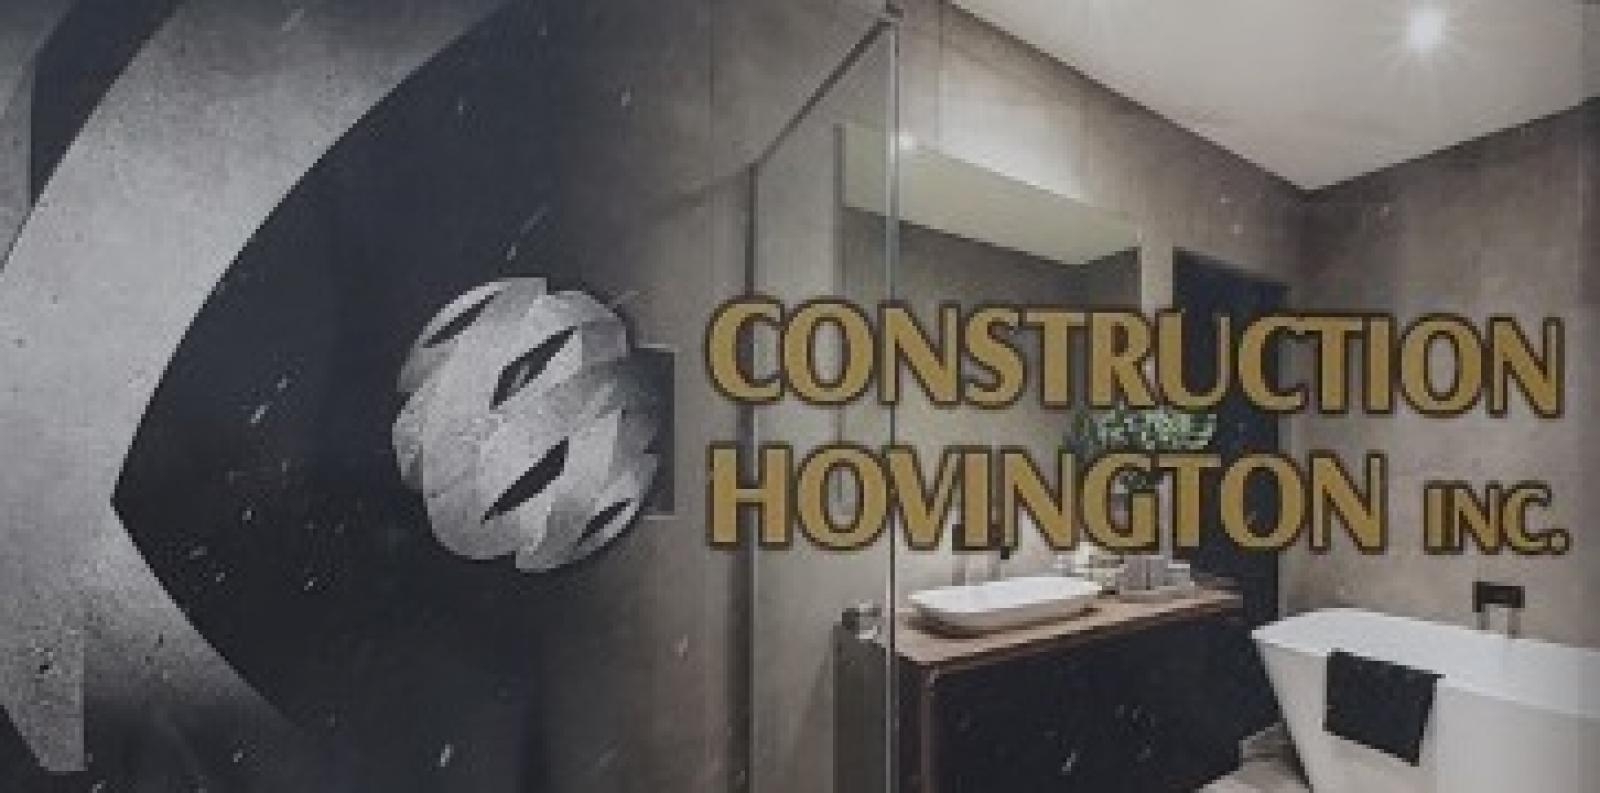 Construction hovington inc. Logo